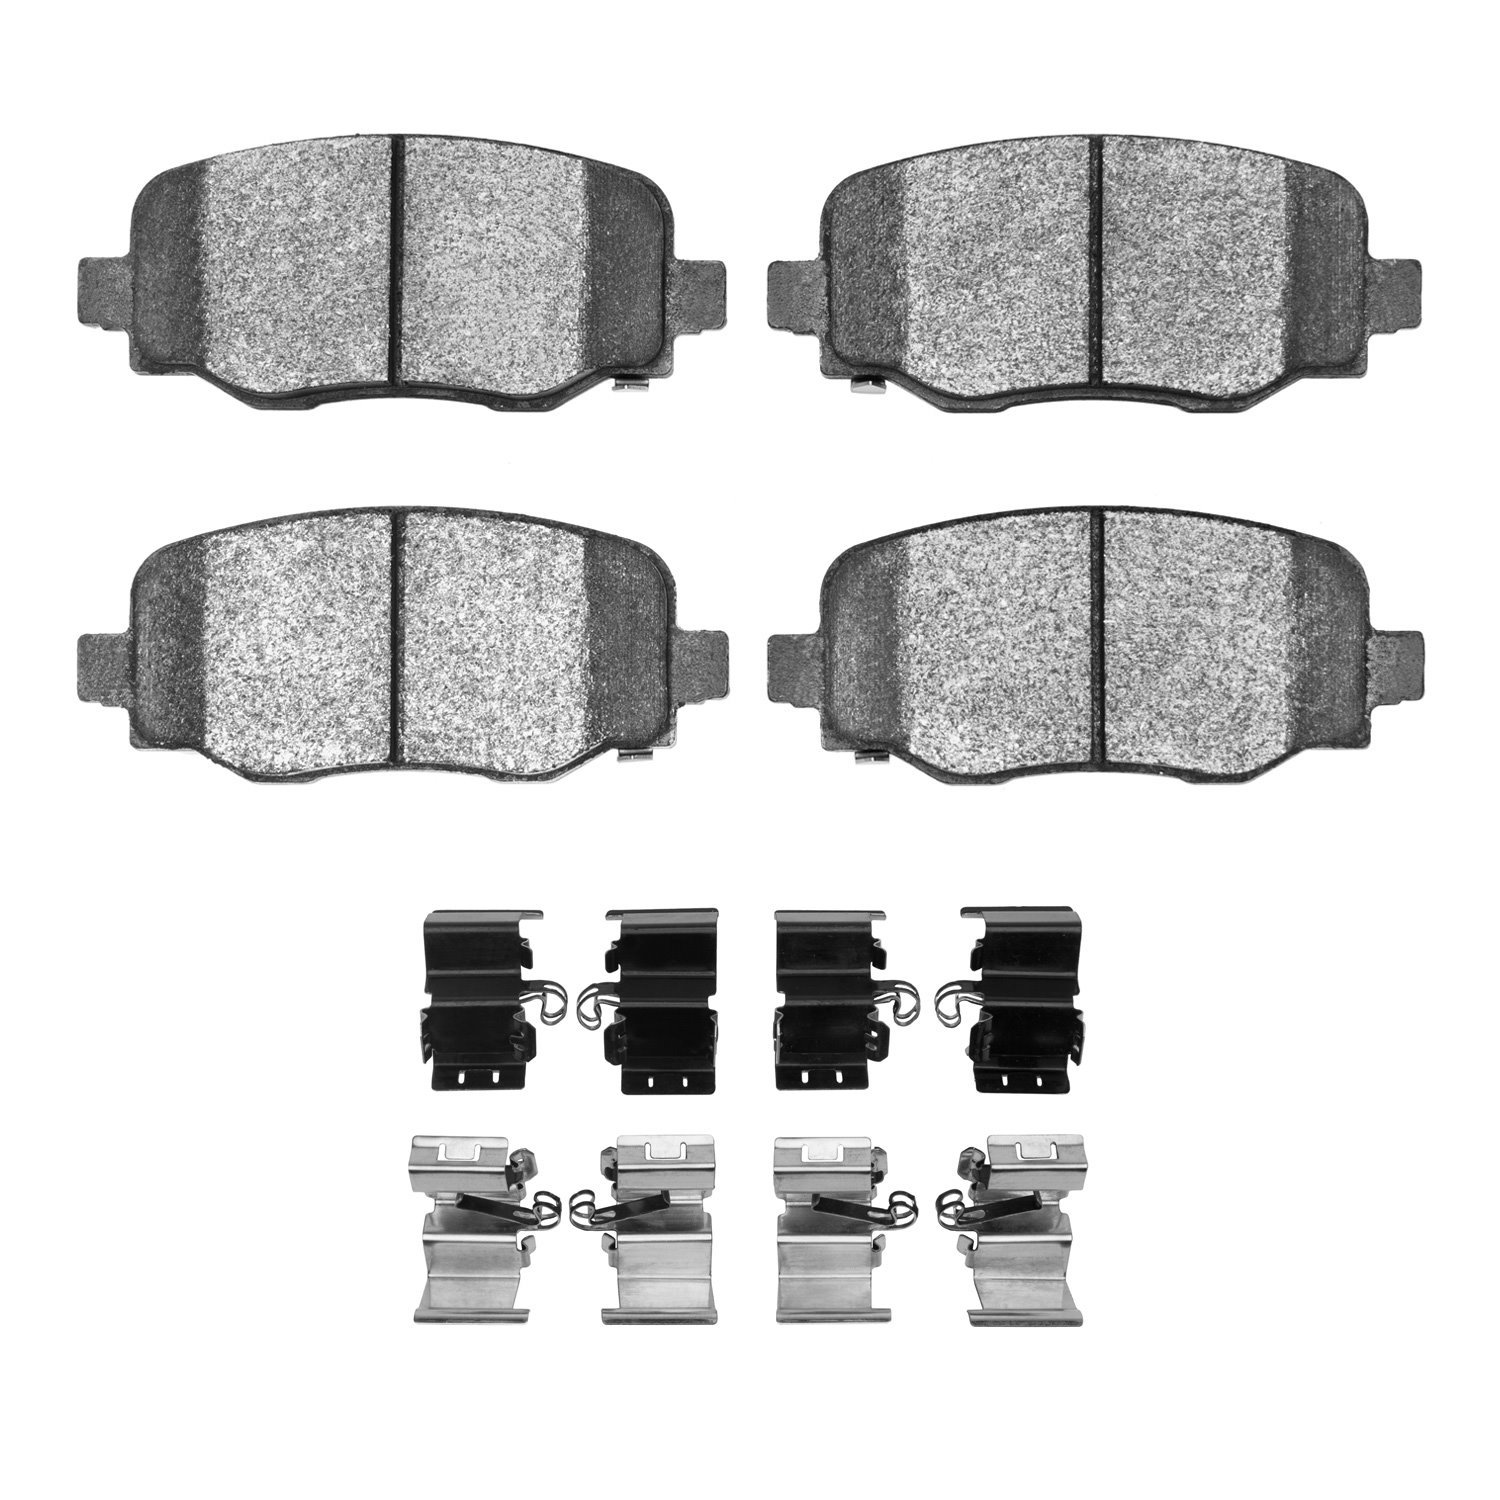 1551-1734-01 5000 Advanced Ceramic Brake Pads & Hardware Kit, Fits Select Mopar, Position: Rear